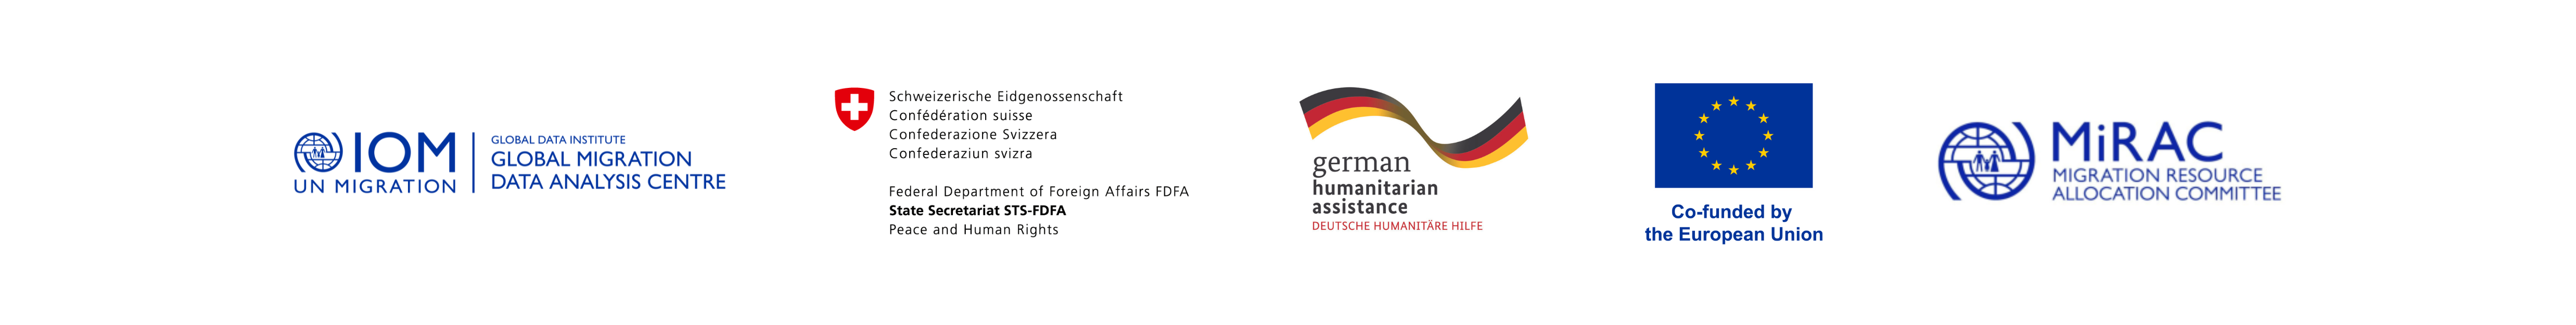 German humanitarian assistance